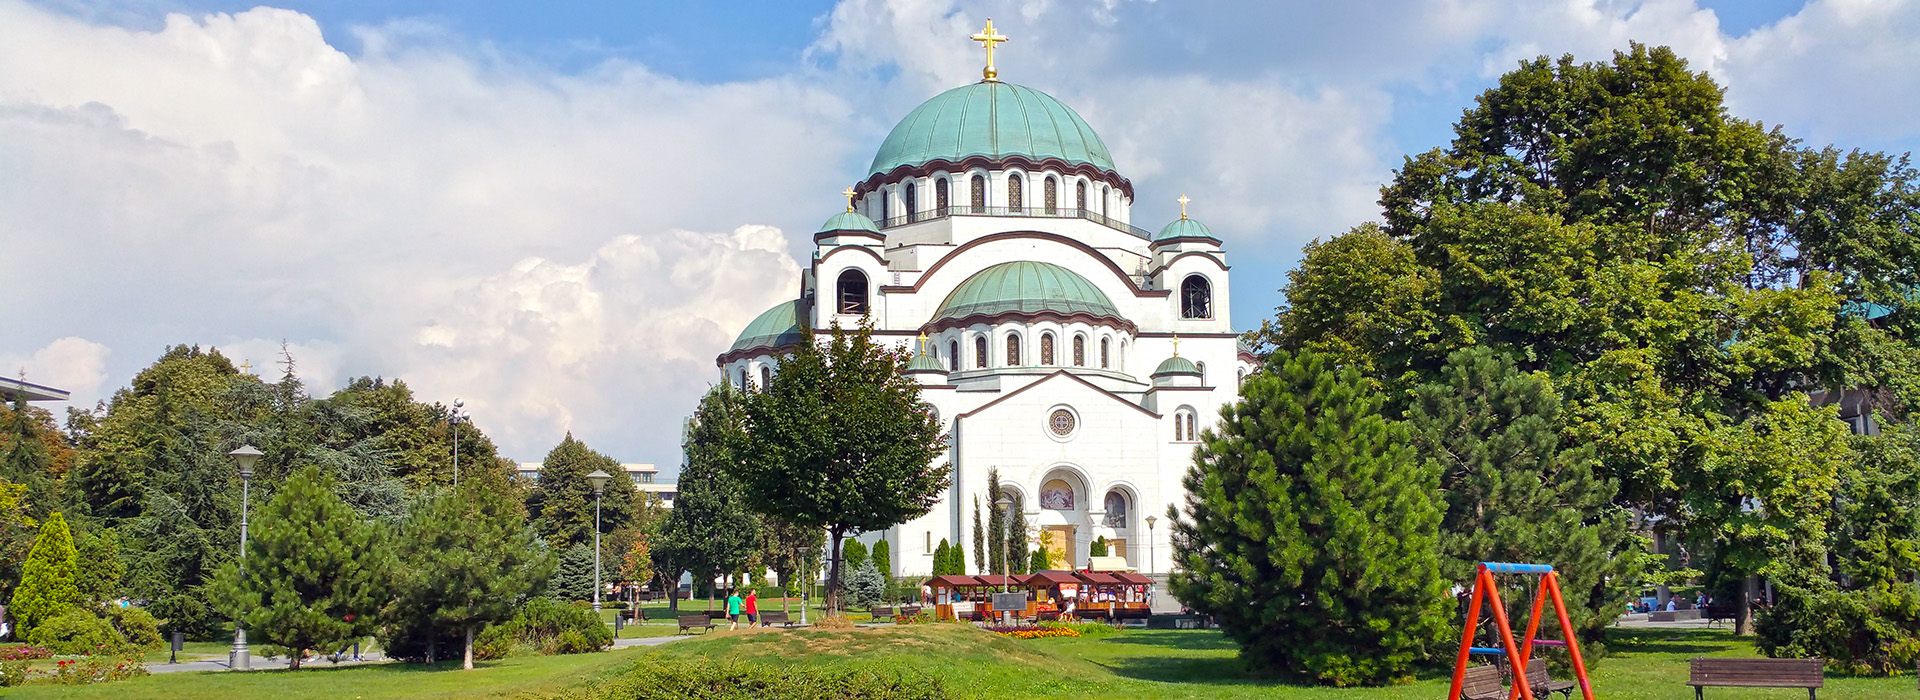 Walking Serbia guided holiday - Belgrade - Temple of Saint Sava